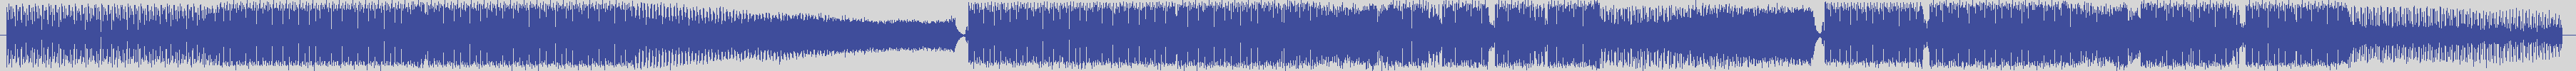 atomic_recordings [AR013] Richard Tesh - Bring on Down [Main Mix] audio wave form